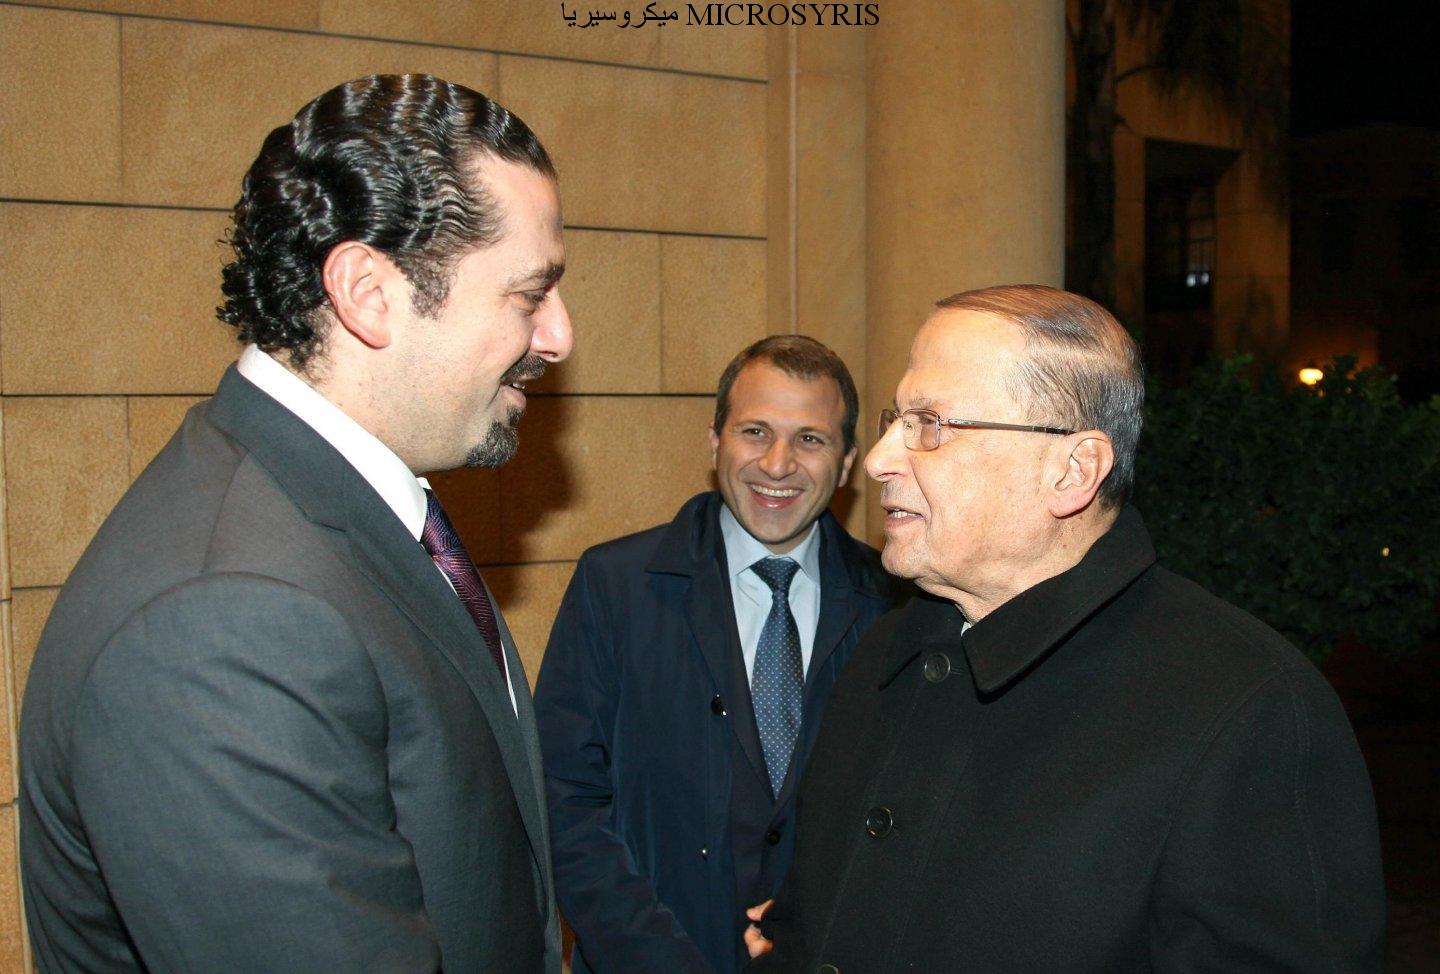 Hariri-a la izquierda-, Basil y Aoun